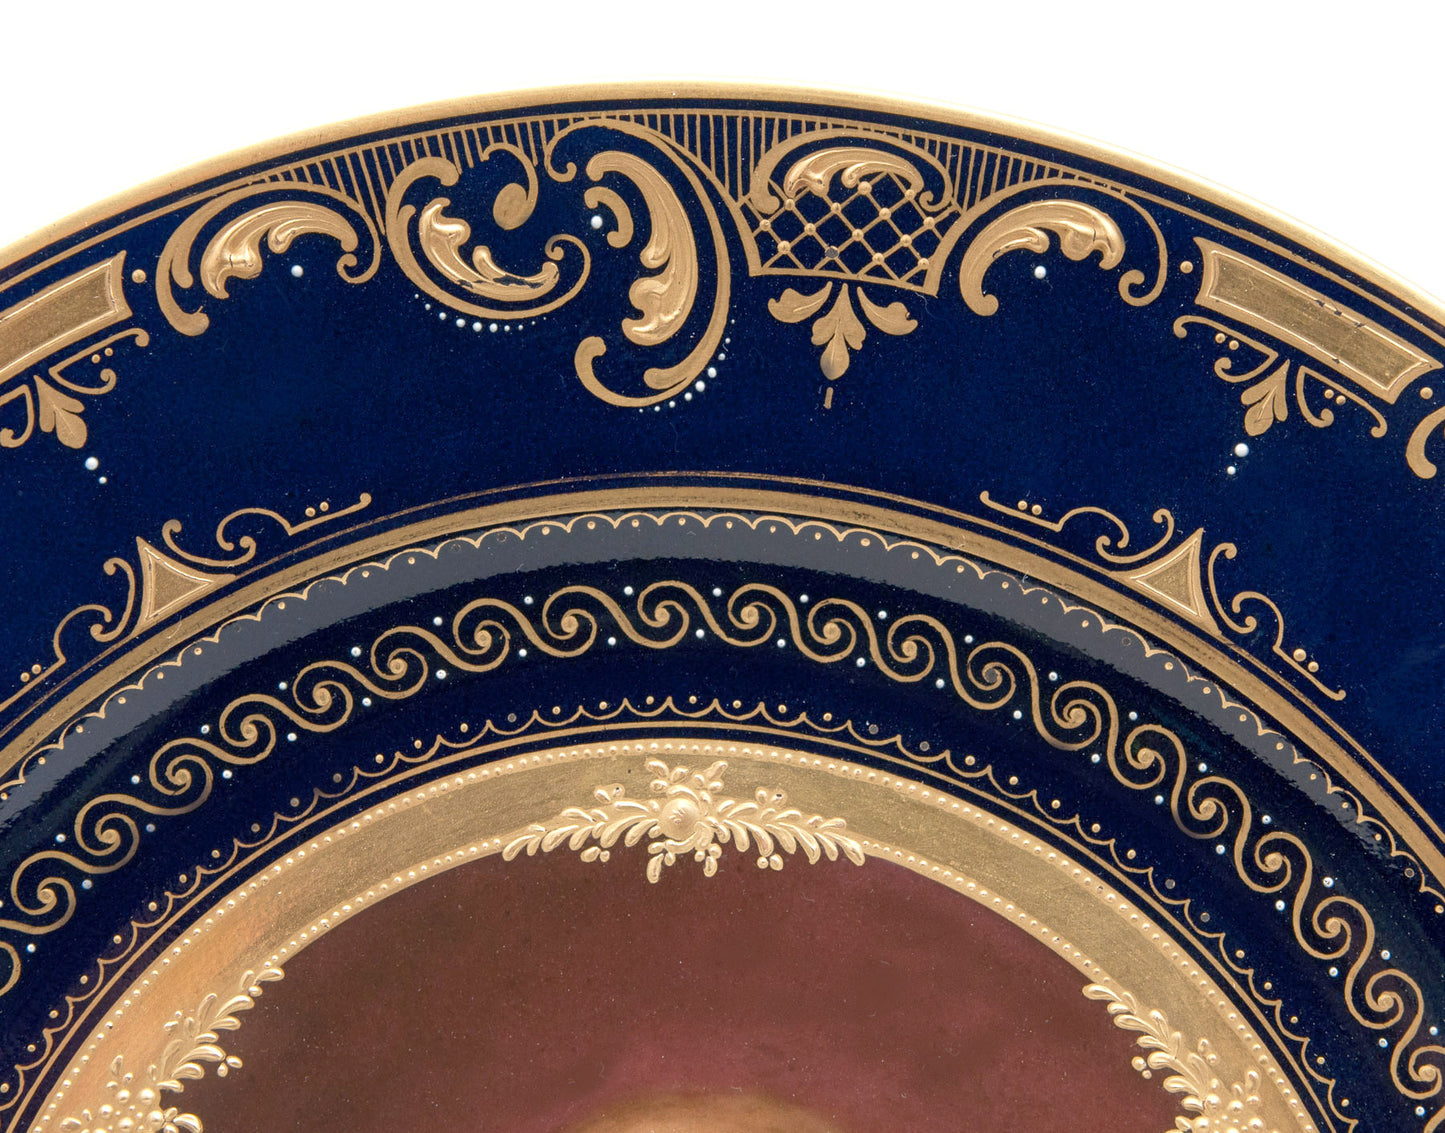 Antique Vienna Porcelain Hand Painted Portrait Plate - The Dreamer - H Stadler (Code 0434)